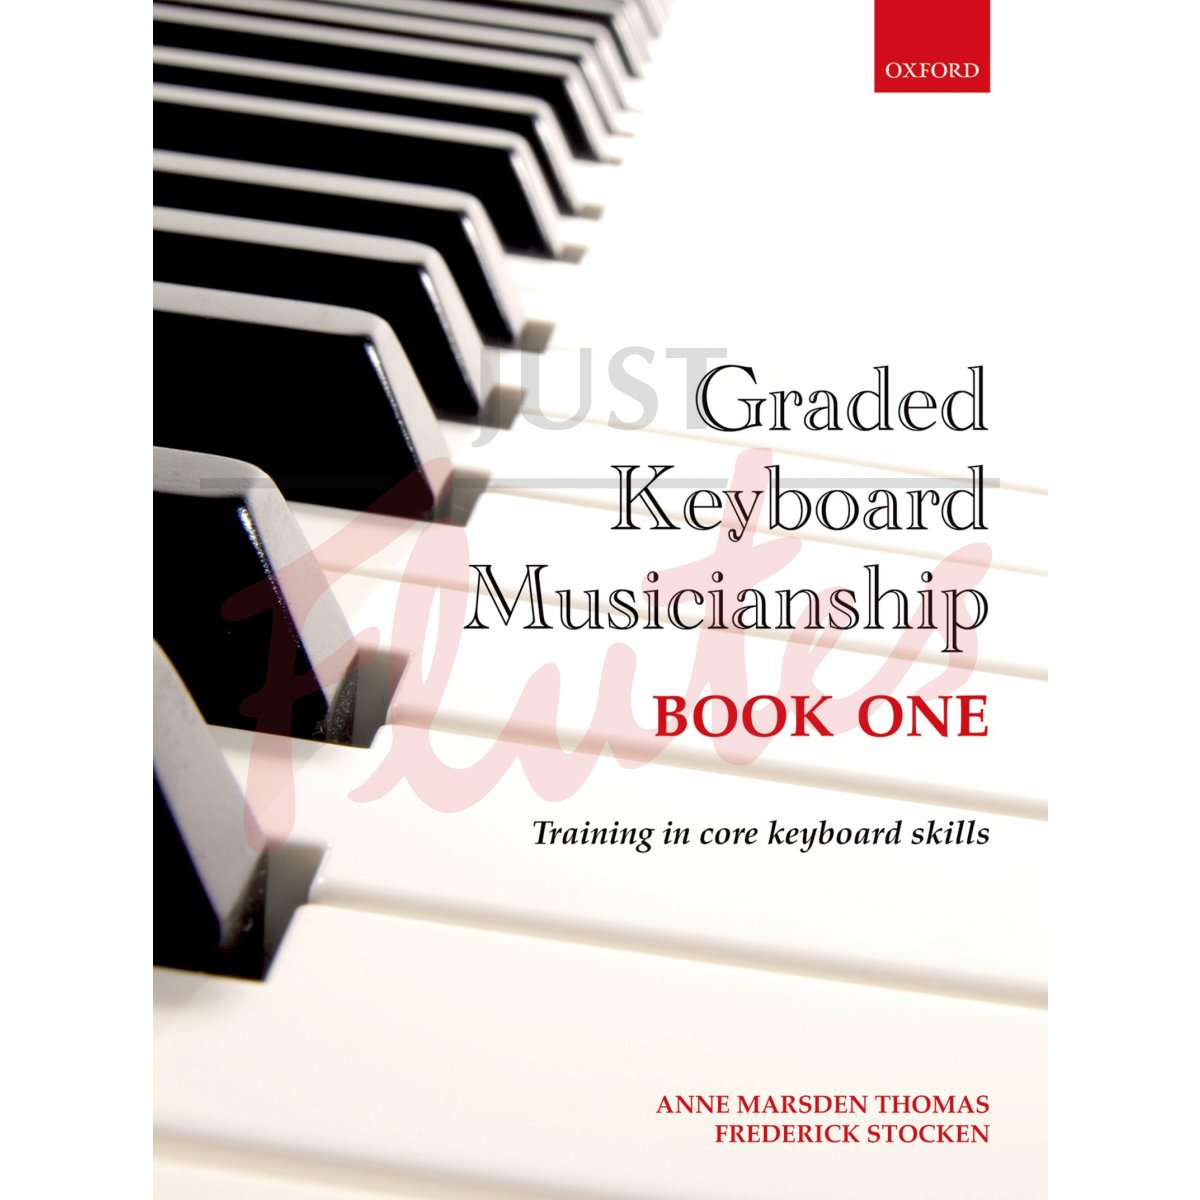 Graded Keyboard Musicianship: Training in Core Keyboard Skills Book 1